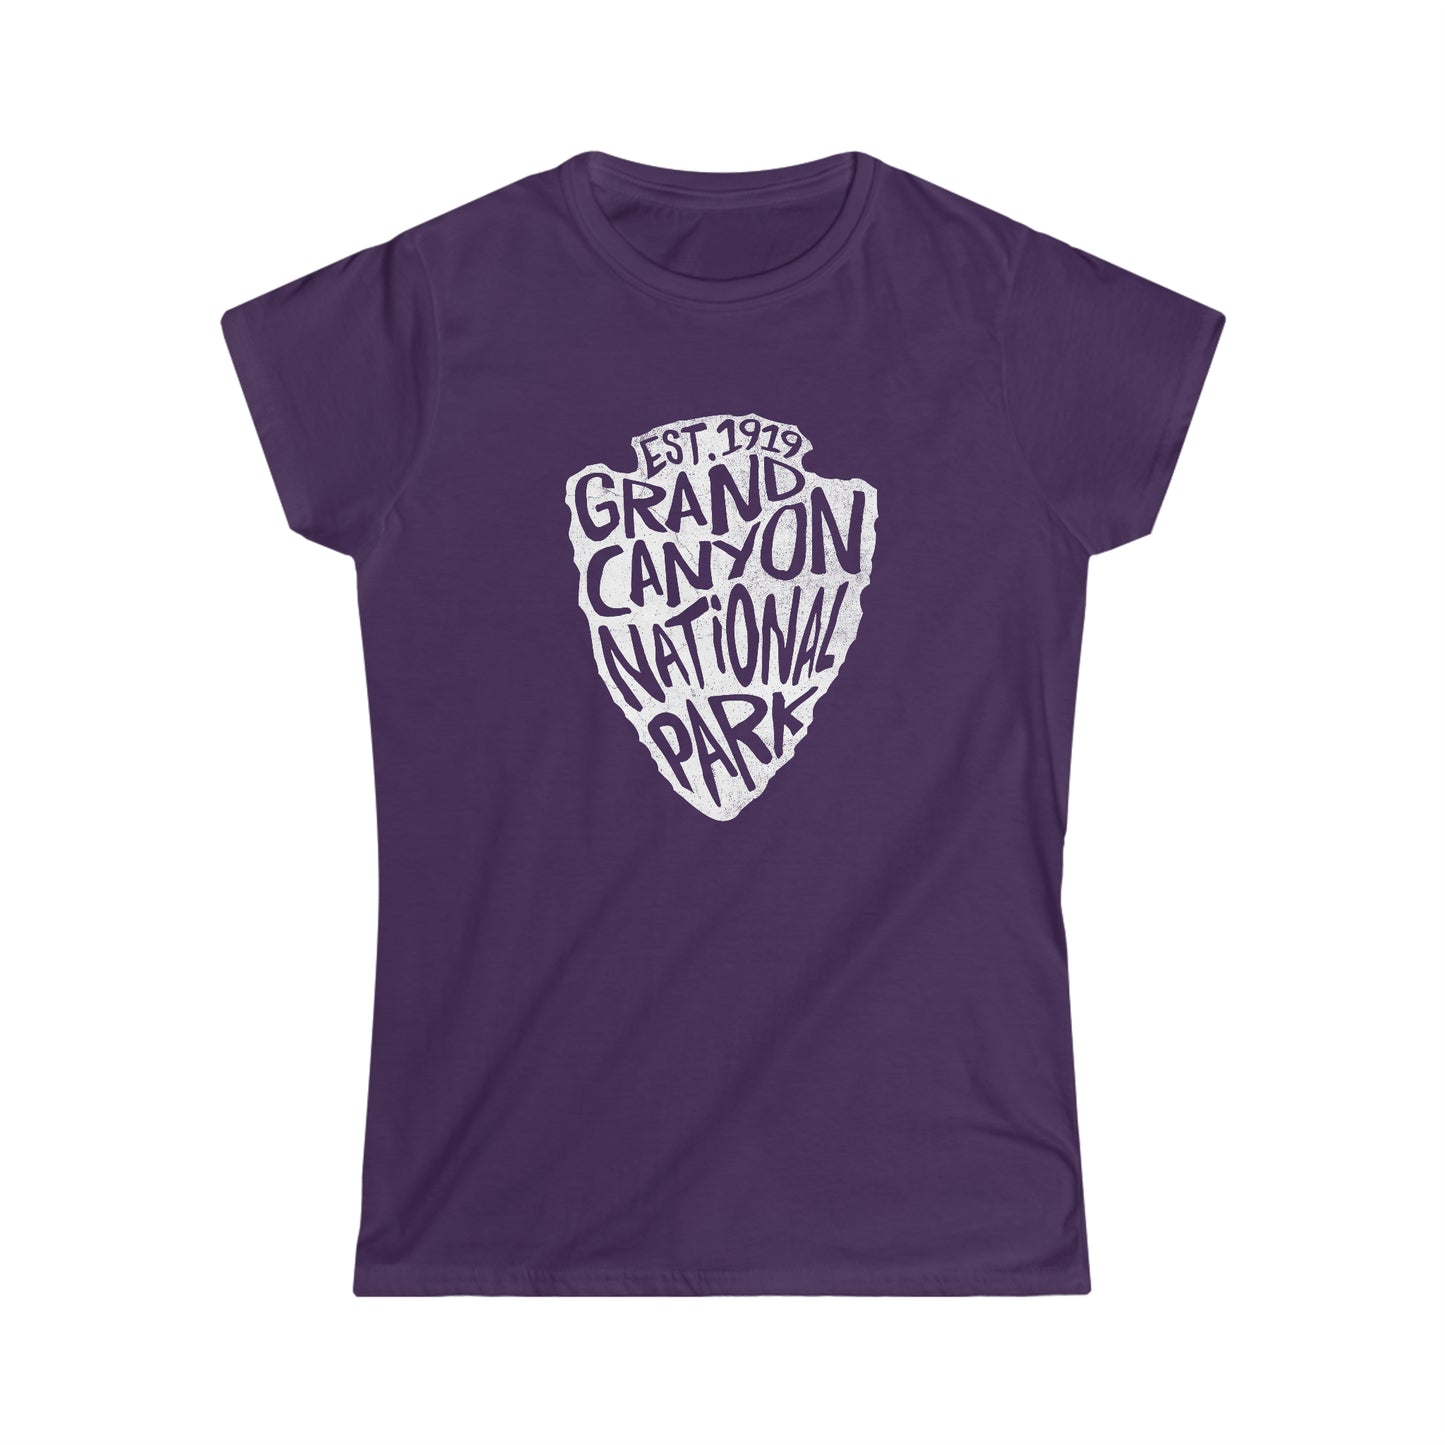 Grand Canyon National Park Women's T-Shirt - Arrowhead Design